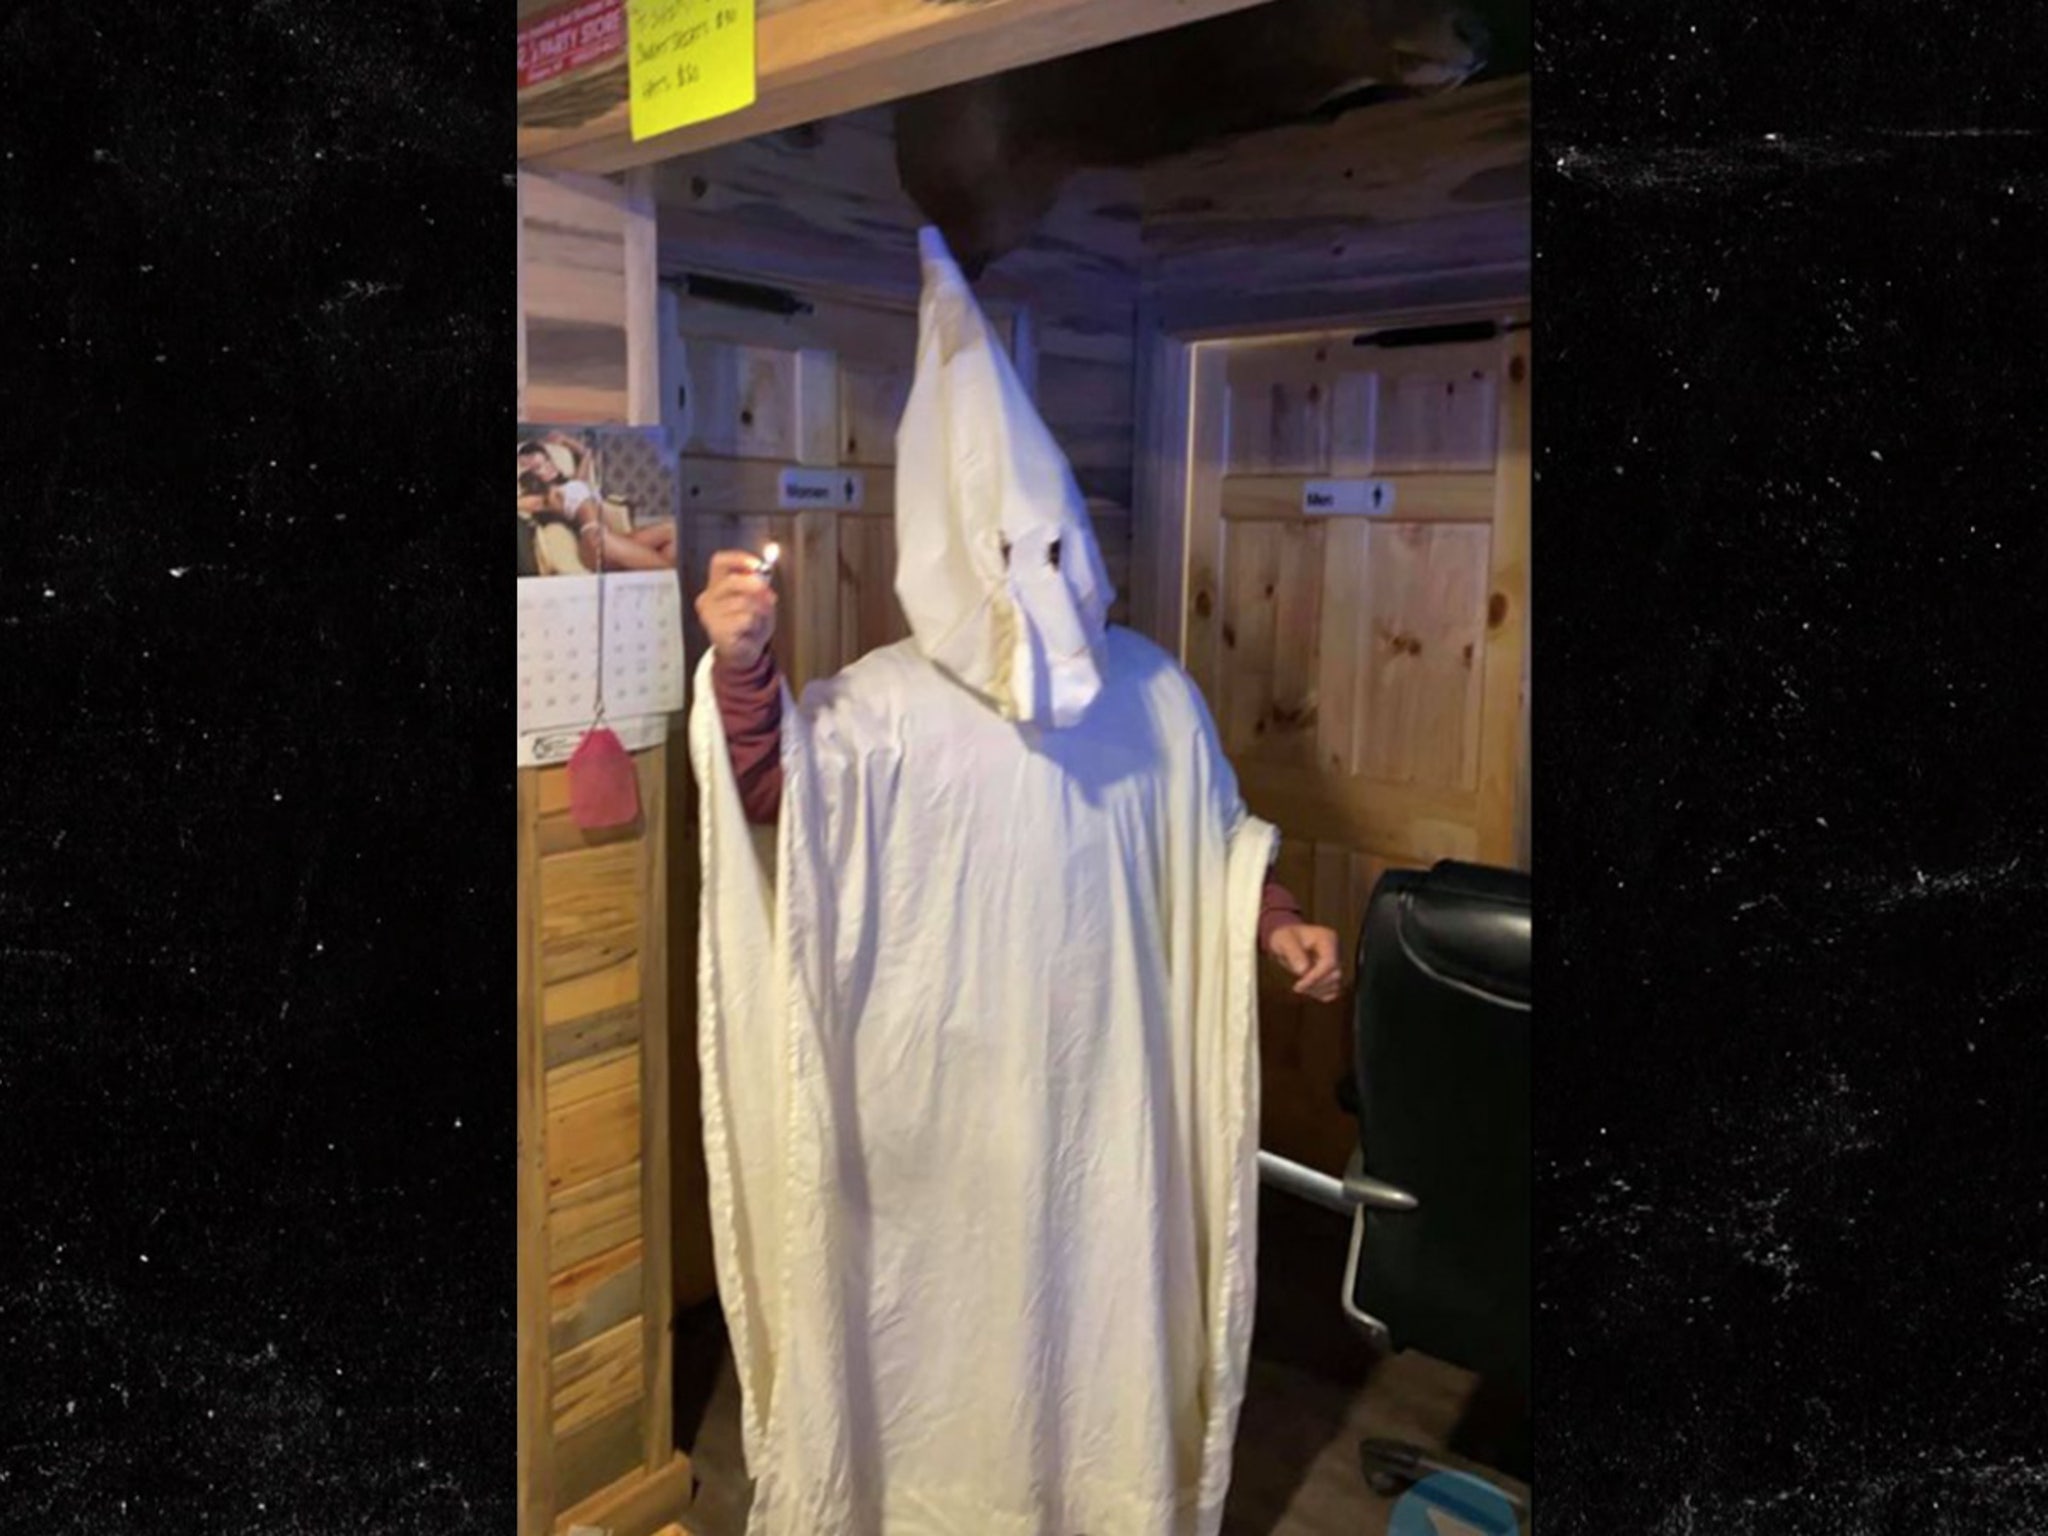 Montana man reportedly dressed as KKK wins contest in Glasgow bar